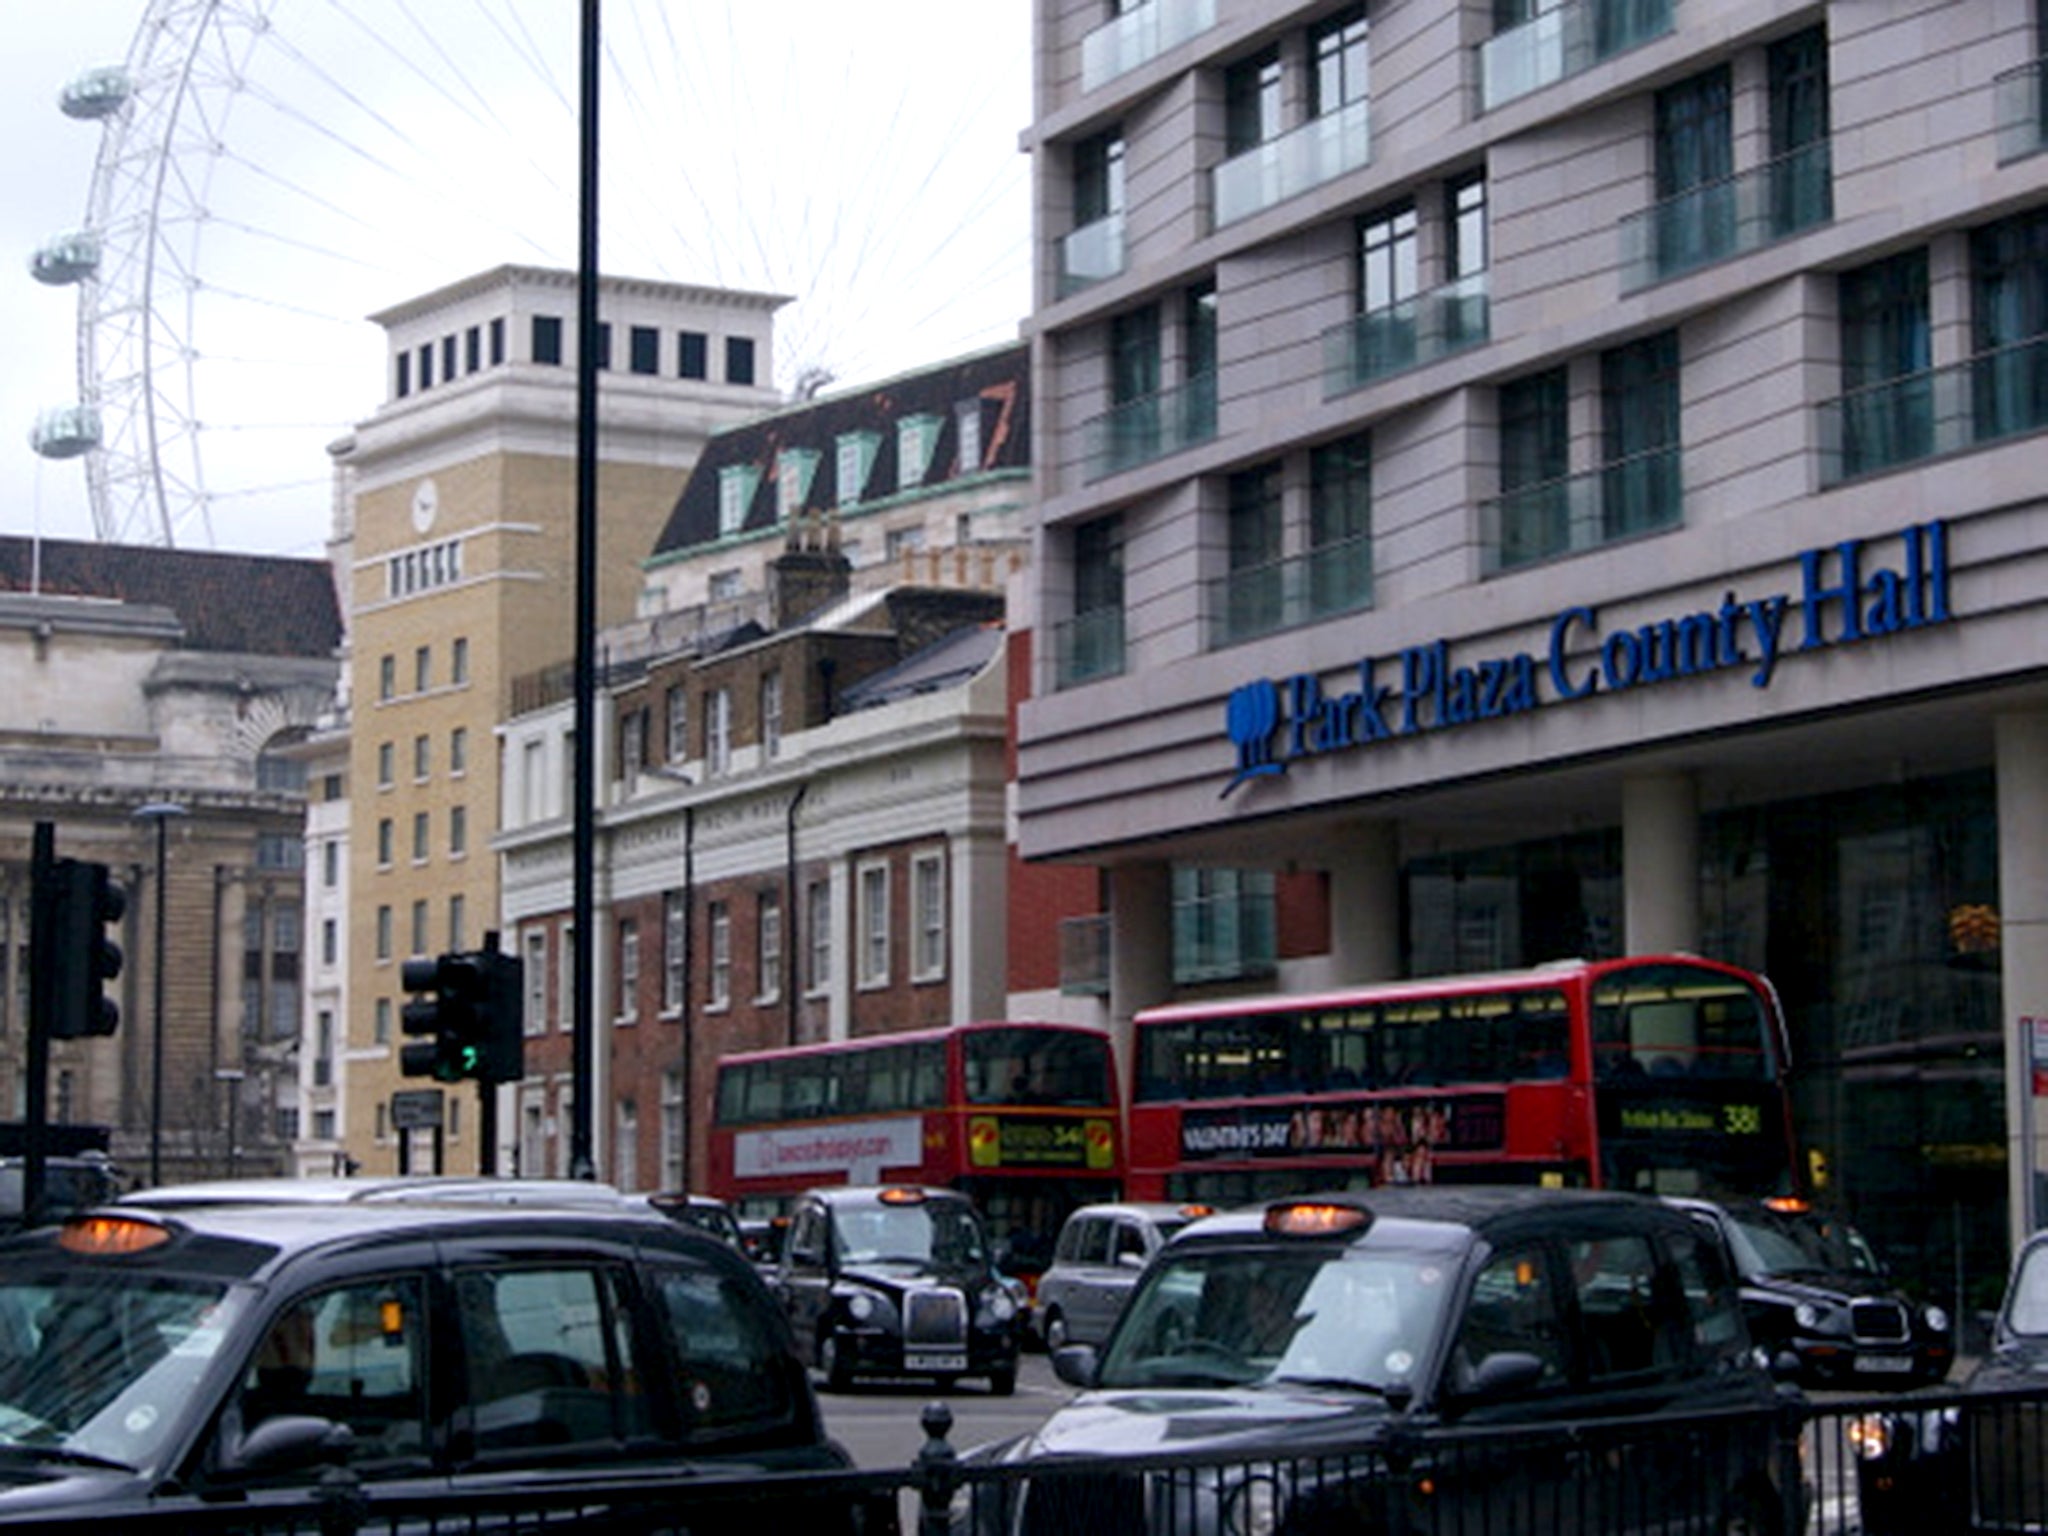 Incident took place on Addington Street in Waterloo